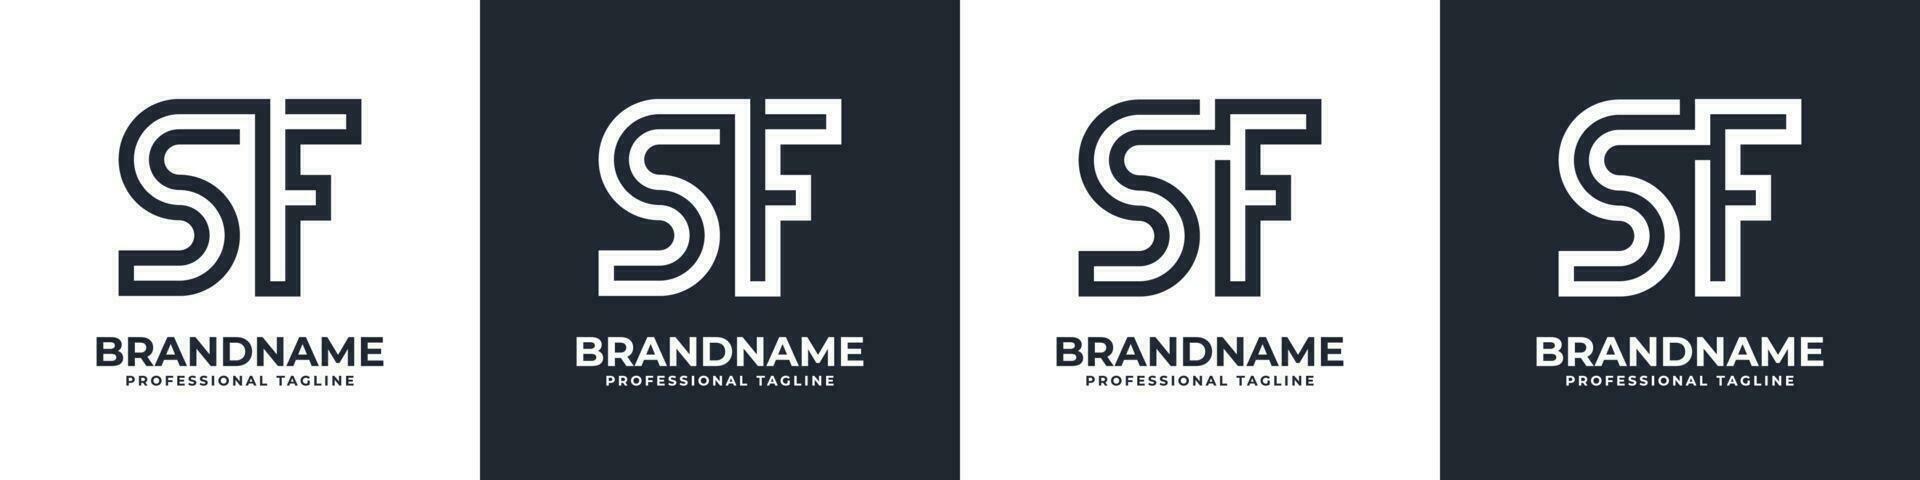 sencillo sf monograma logo, adecuado para ninguna negocio con sf o fs inicial. vector